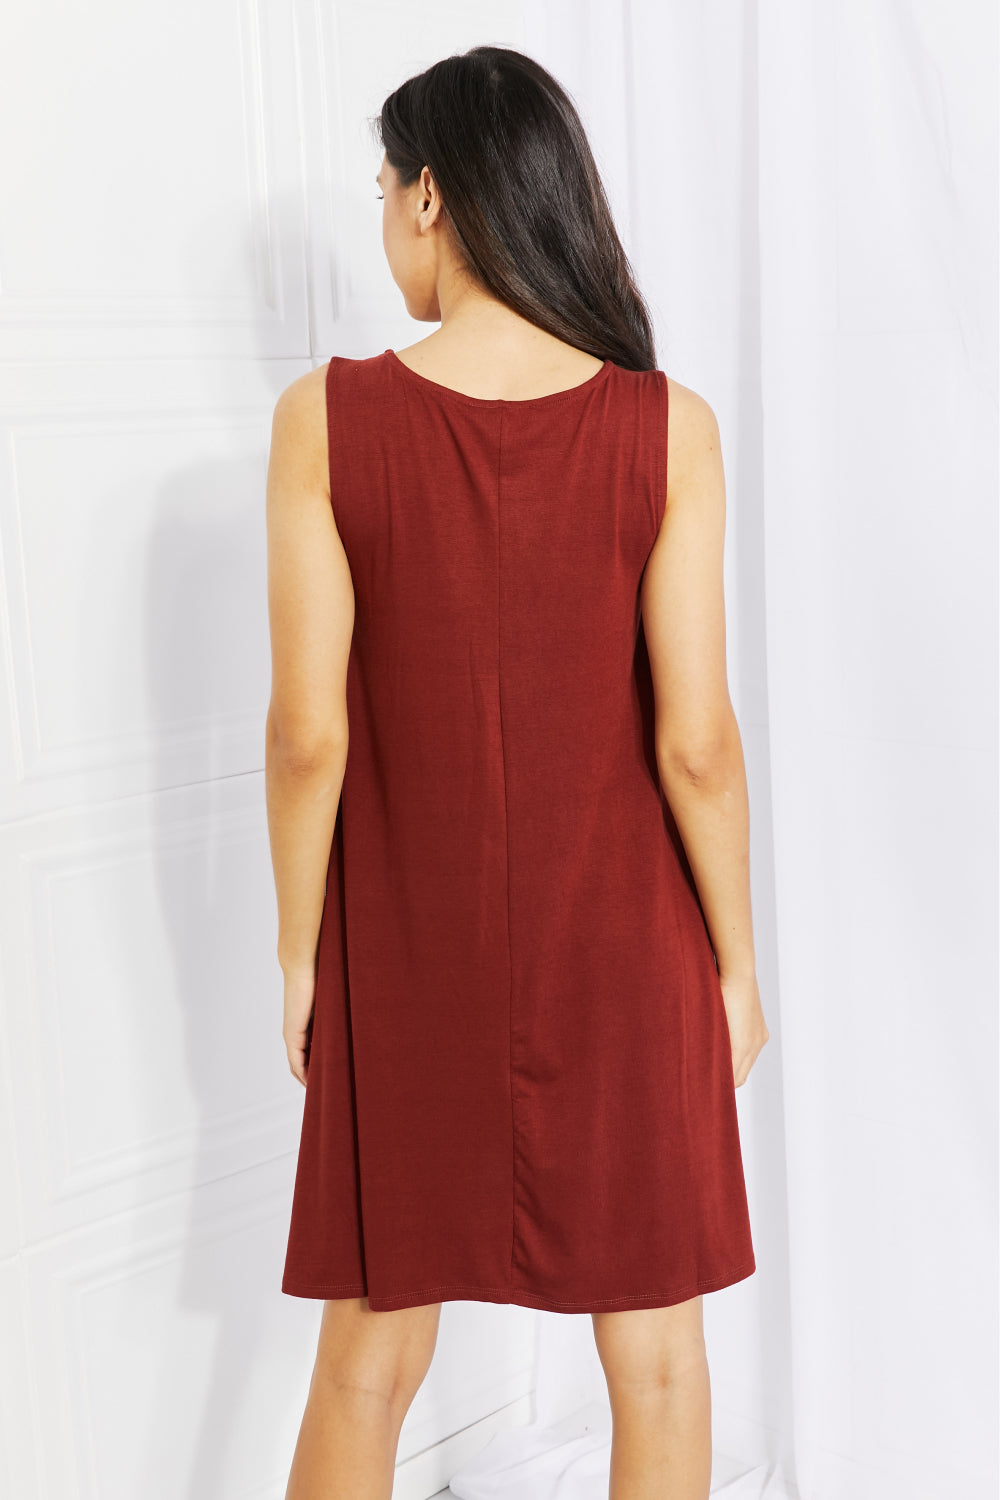 Dance into Spring Full Size Sleeveless Red Dress